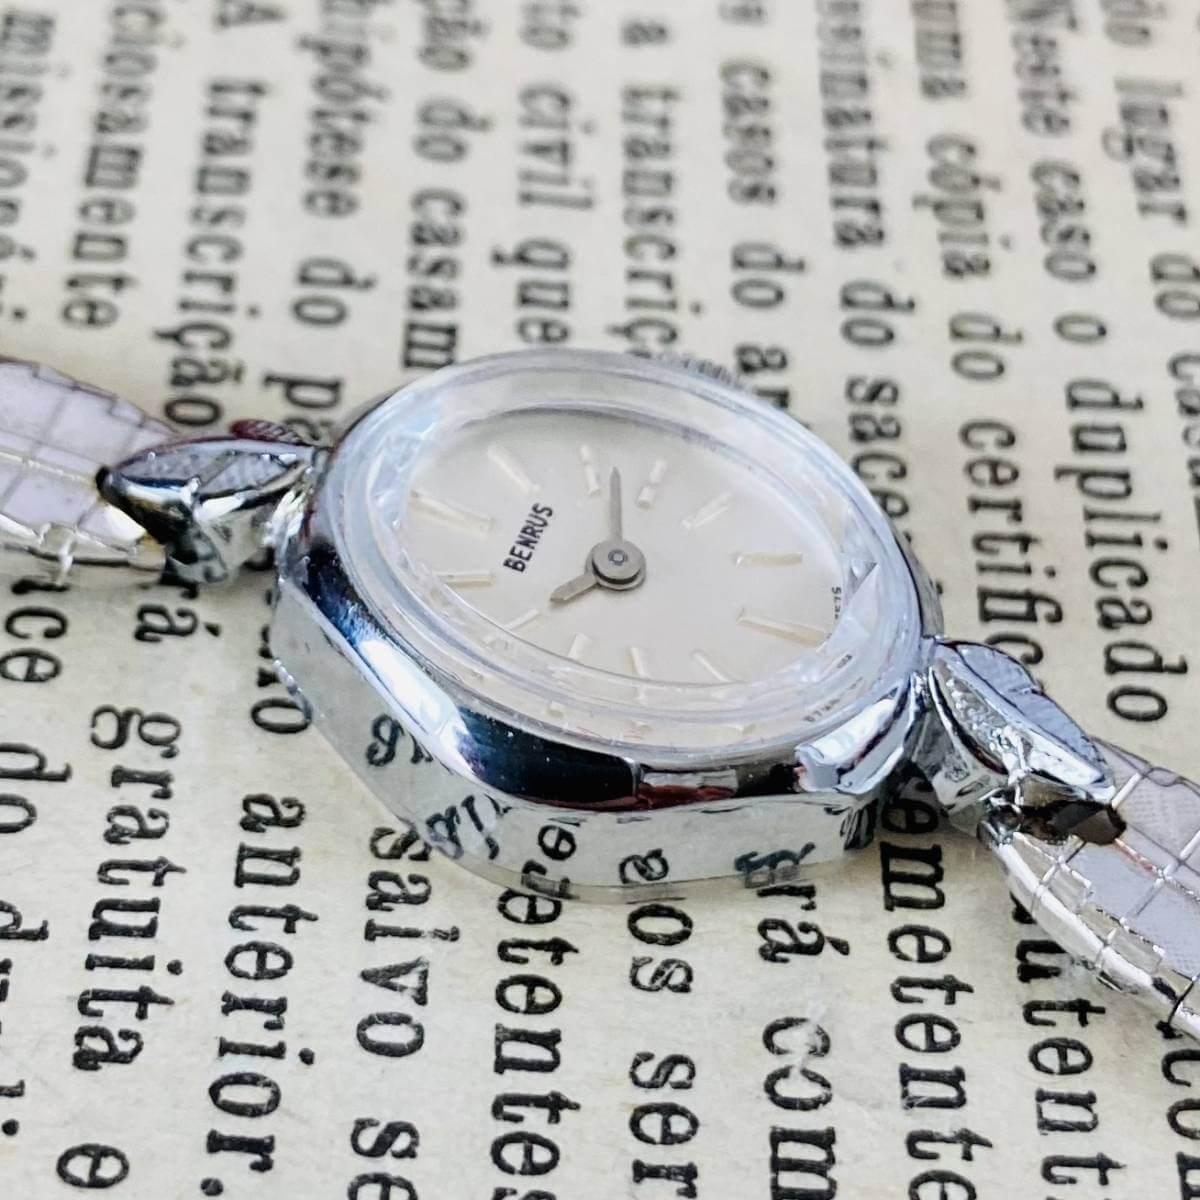 Benrus Wristwatch Manual Wind Ladies Vintage Bracelet - Murphy Johnson Watches Co.